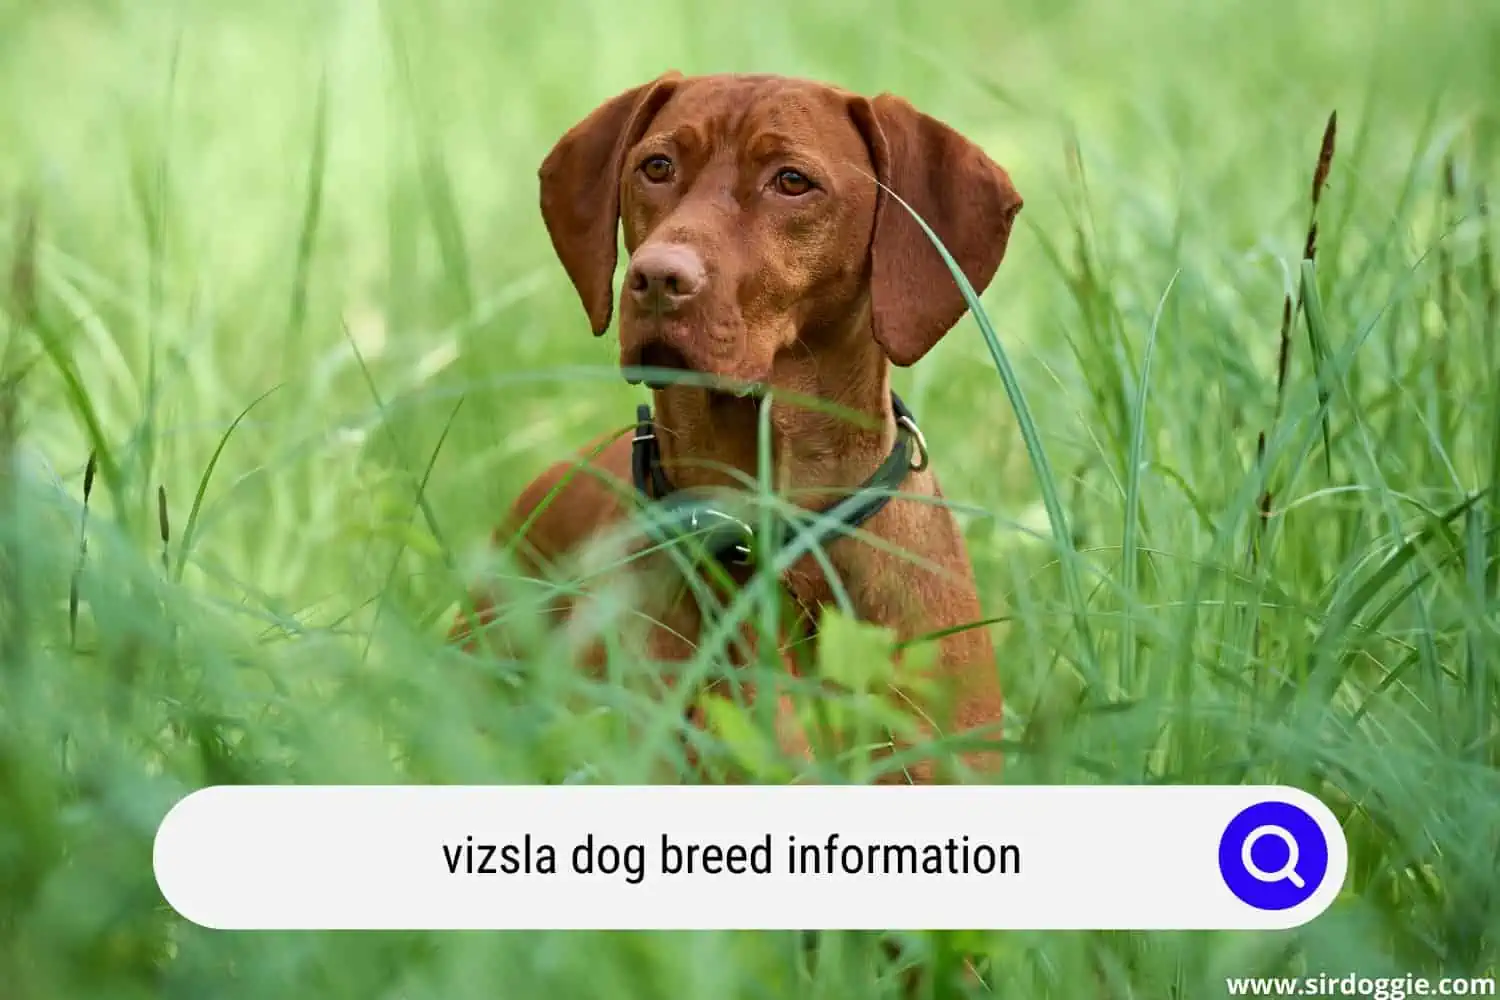 Vizsla dog walking in the green grass